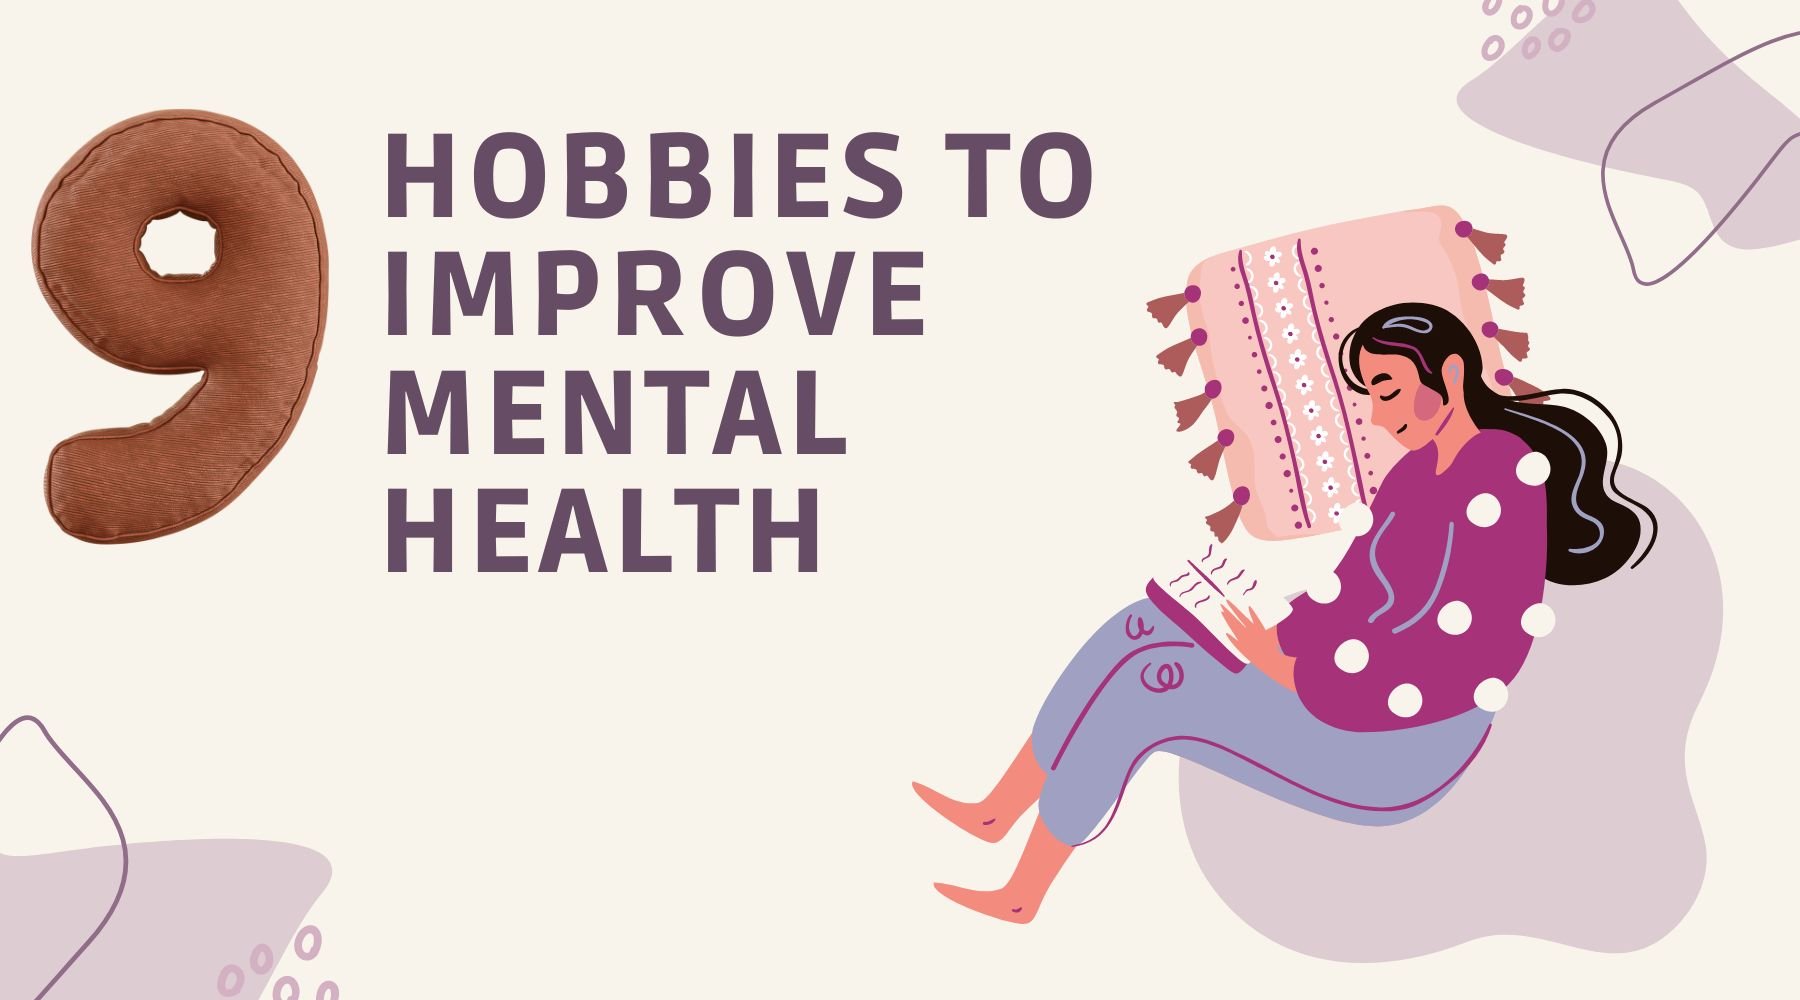 9 Hobbies to Improve Mental Health - Bookshelf Memories